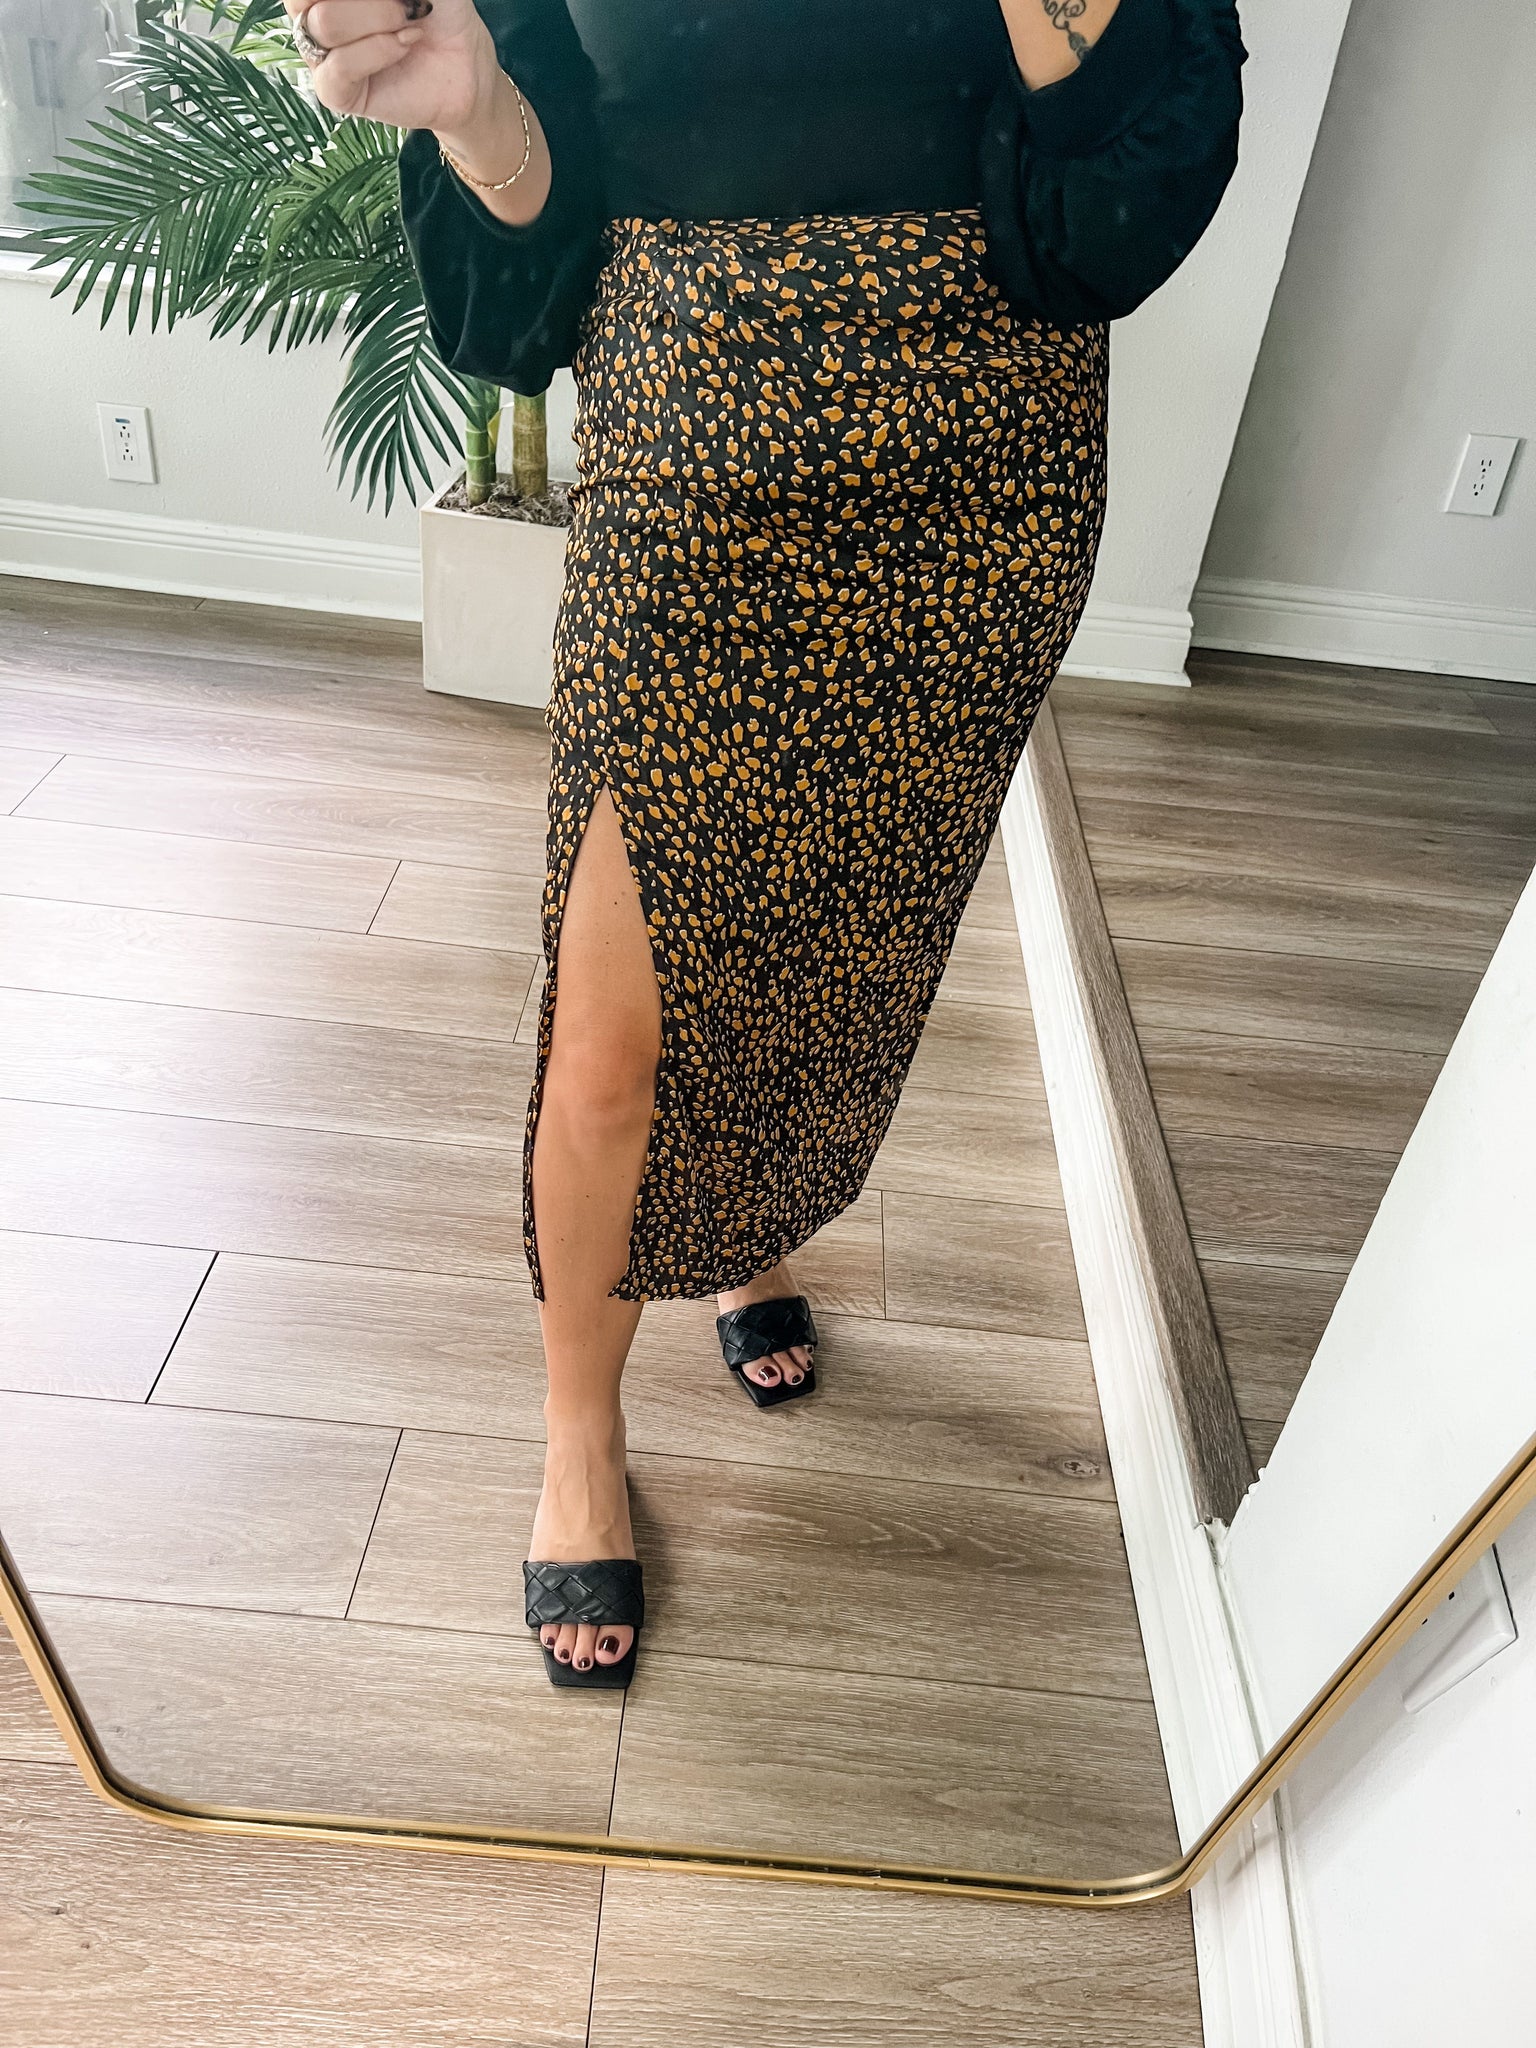 The Little Leopard Skirt